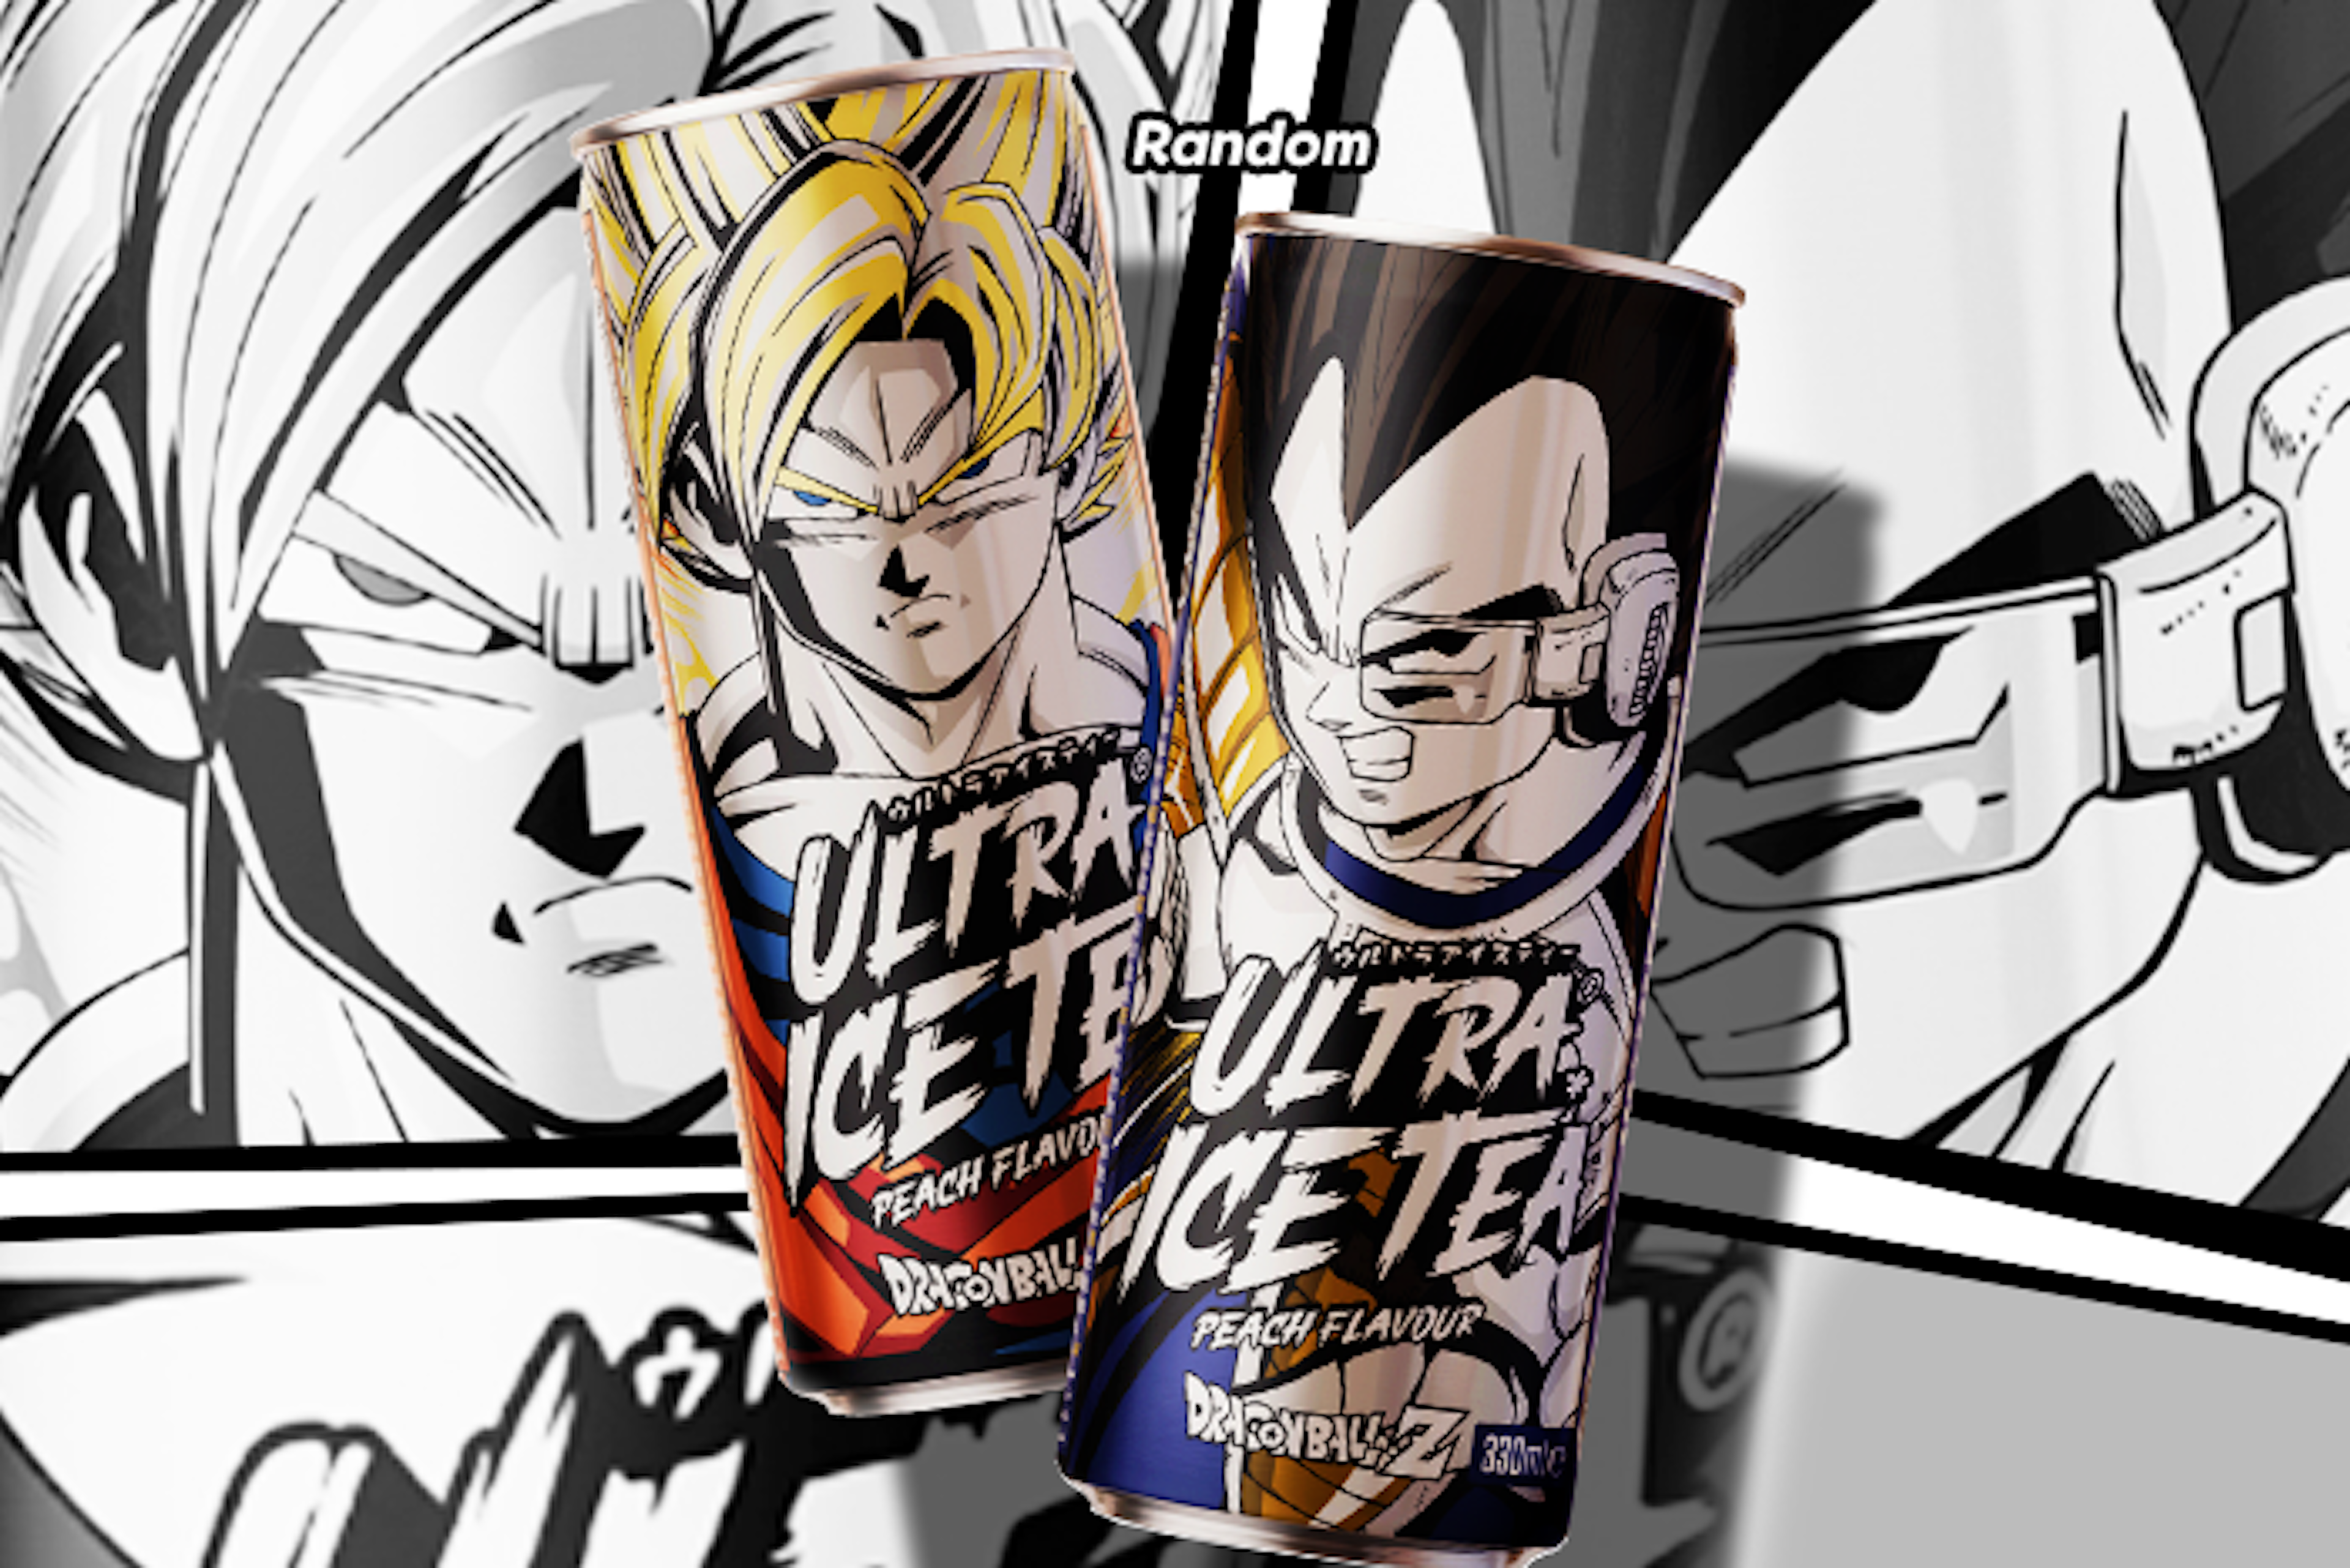 Dragon Ball Z Ultra Ice Tea Peach Flavour Dose mit Goku.